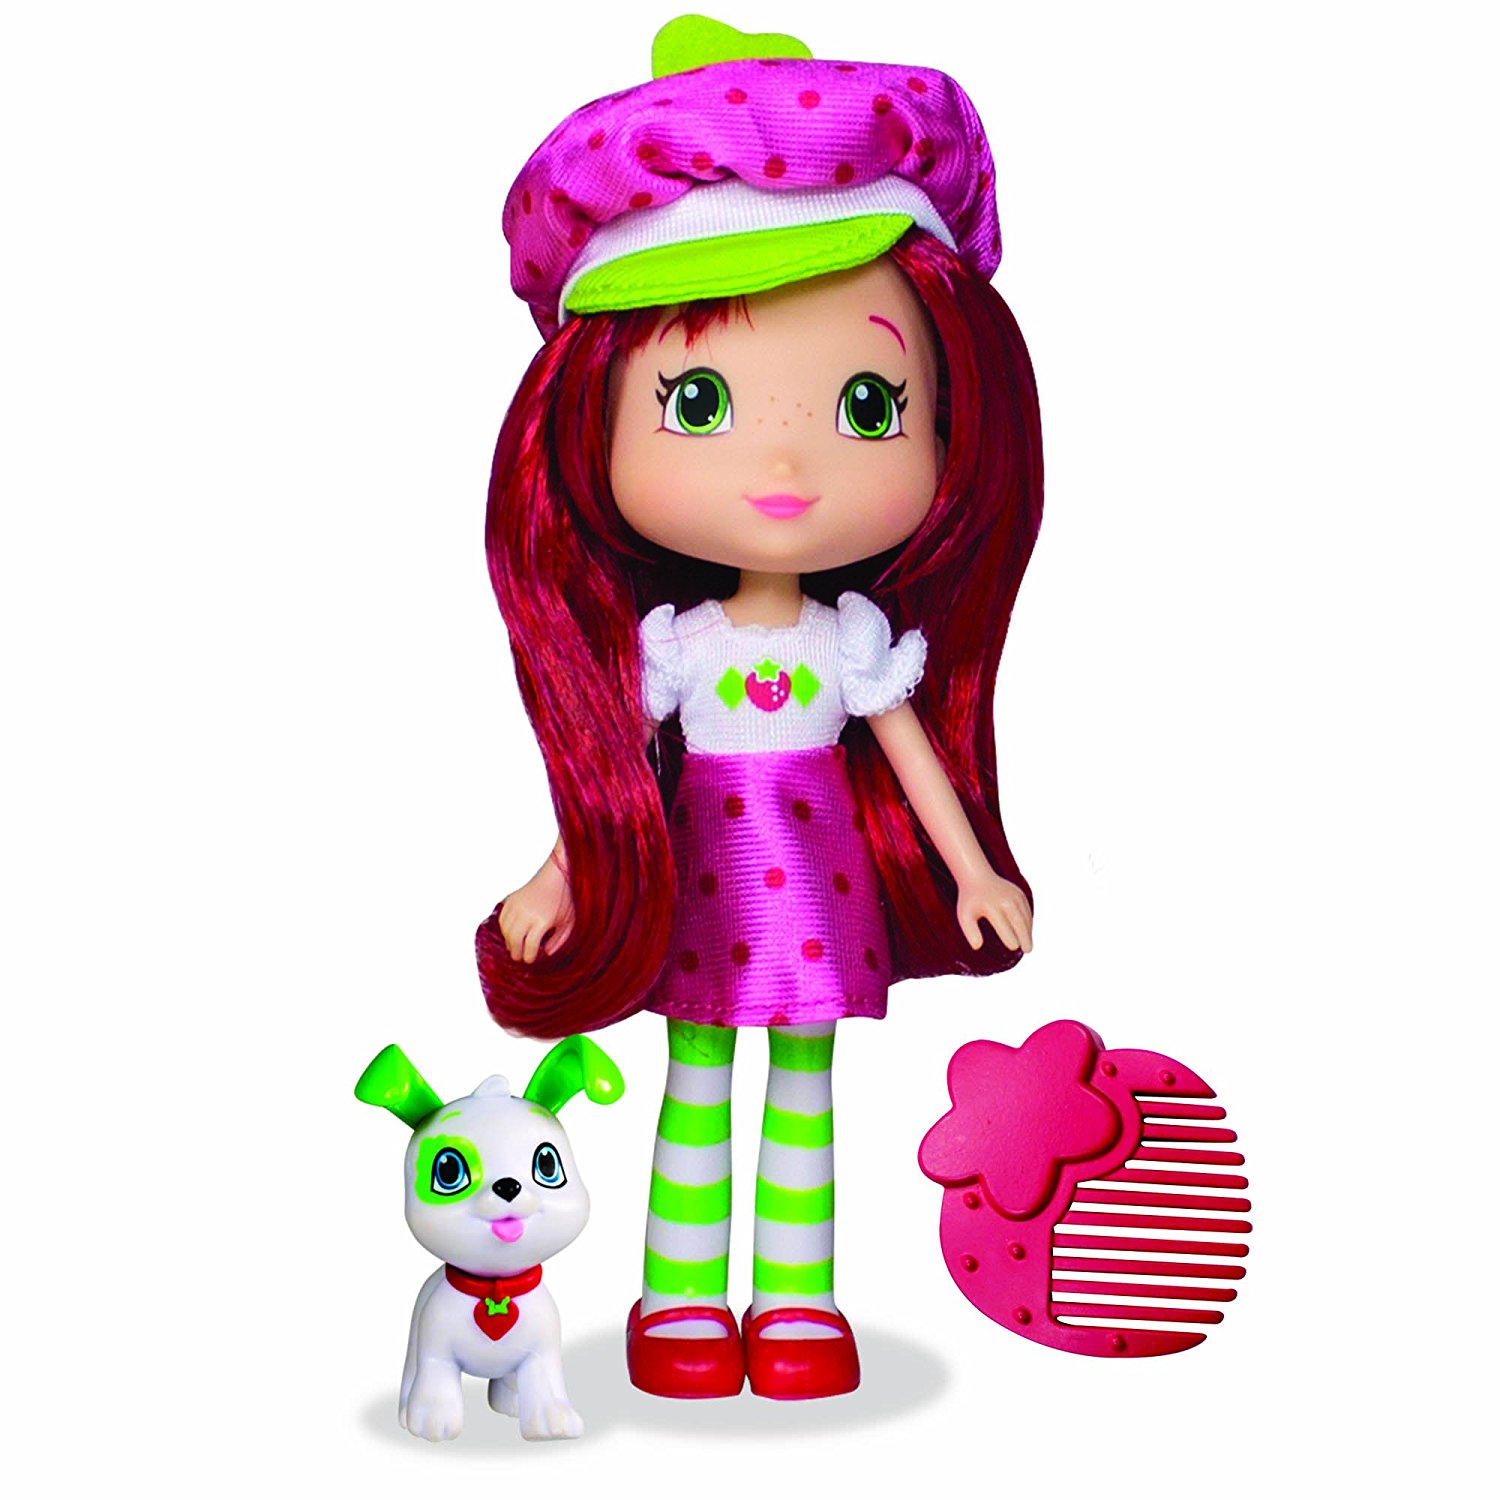 Strawberry Shortcake Doll with Pupcake - image 2 of 2